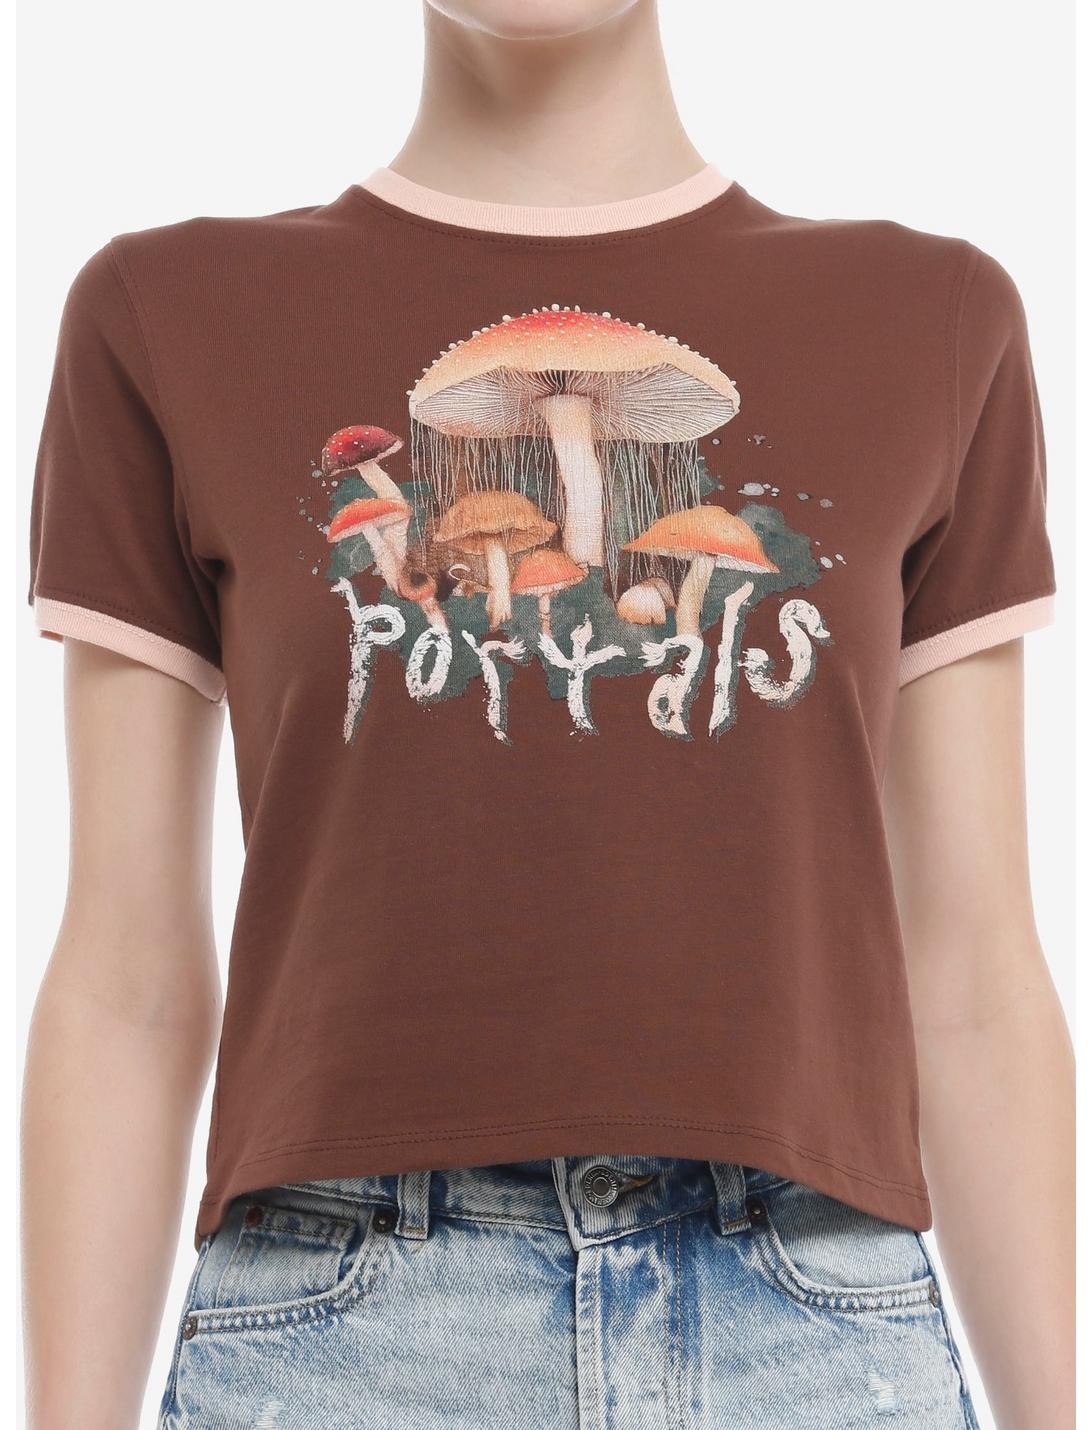 Melanie Martinez Portals Mushroom Baby Ringer T-Shirt, BROWN, hi-res